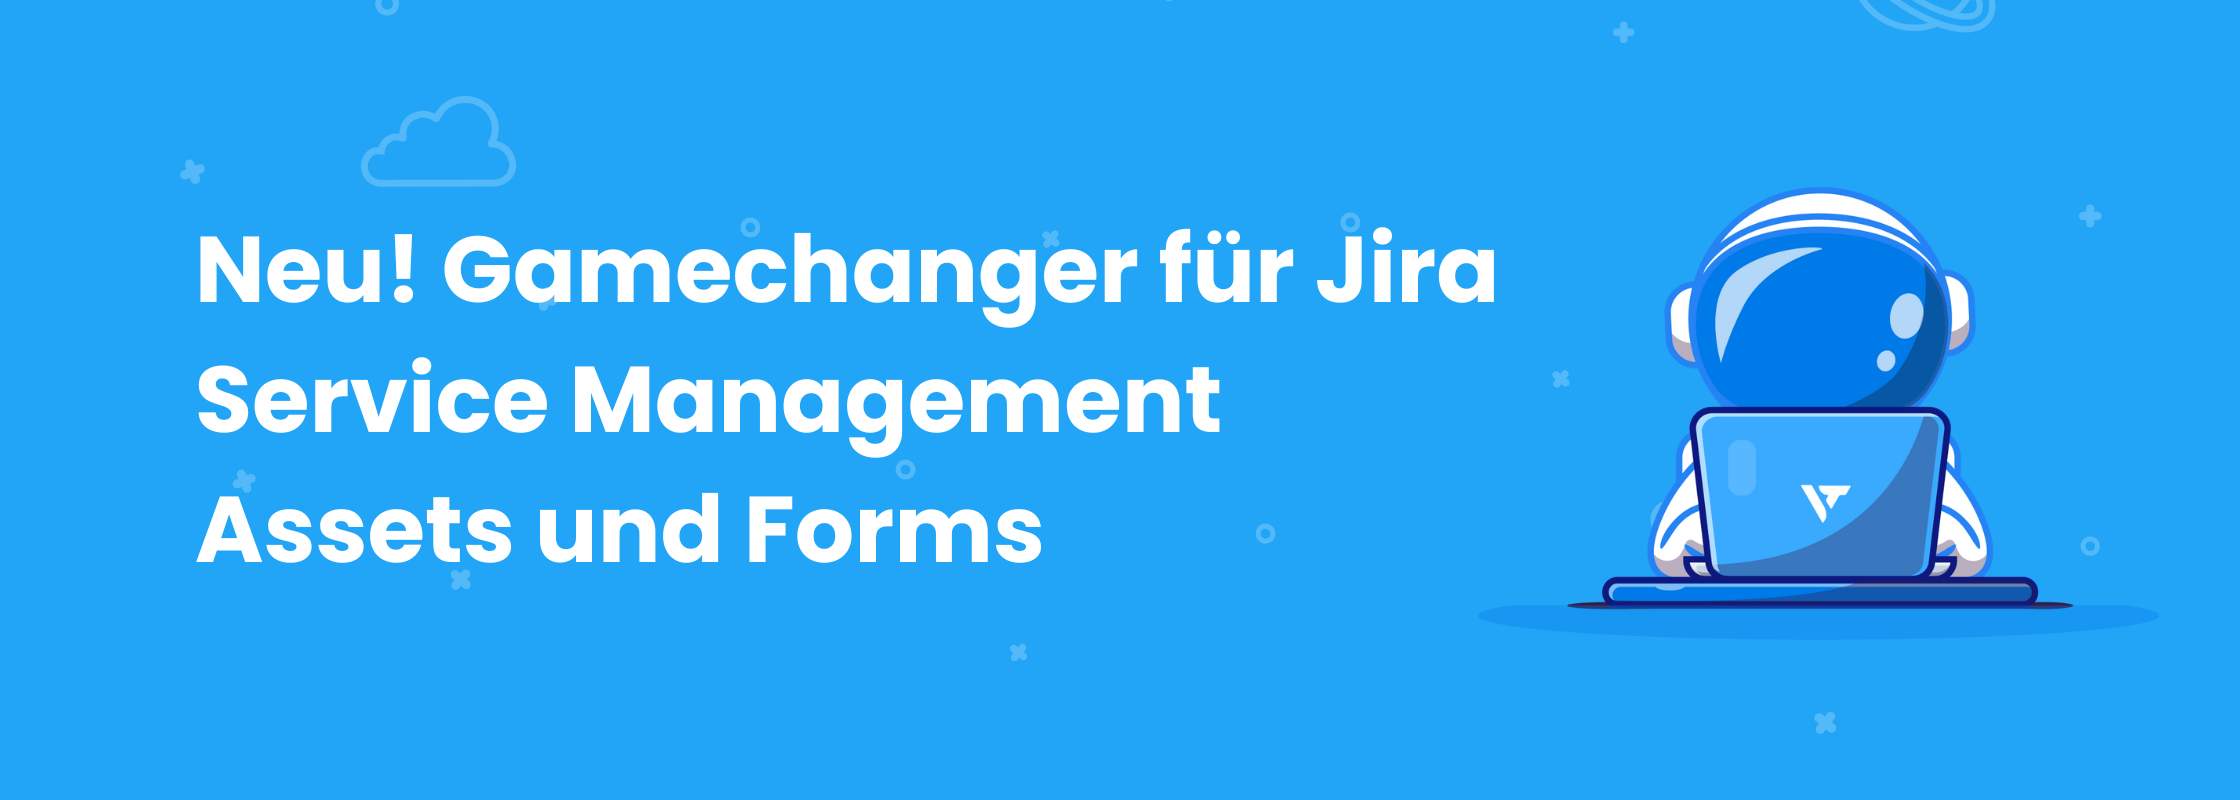 New Jira Service Management Assets and Forms - Blog Post Grafik (4)